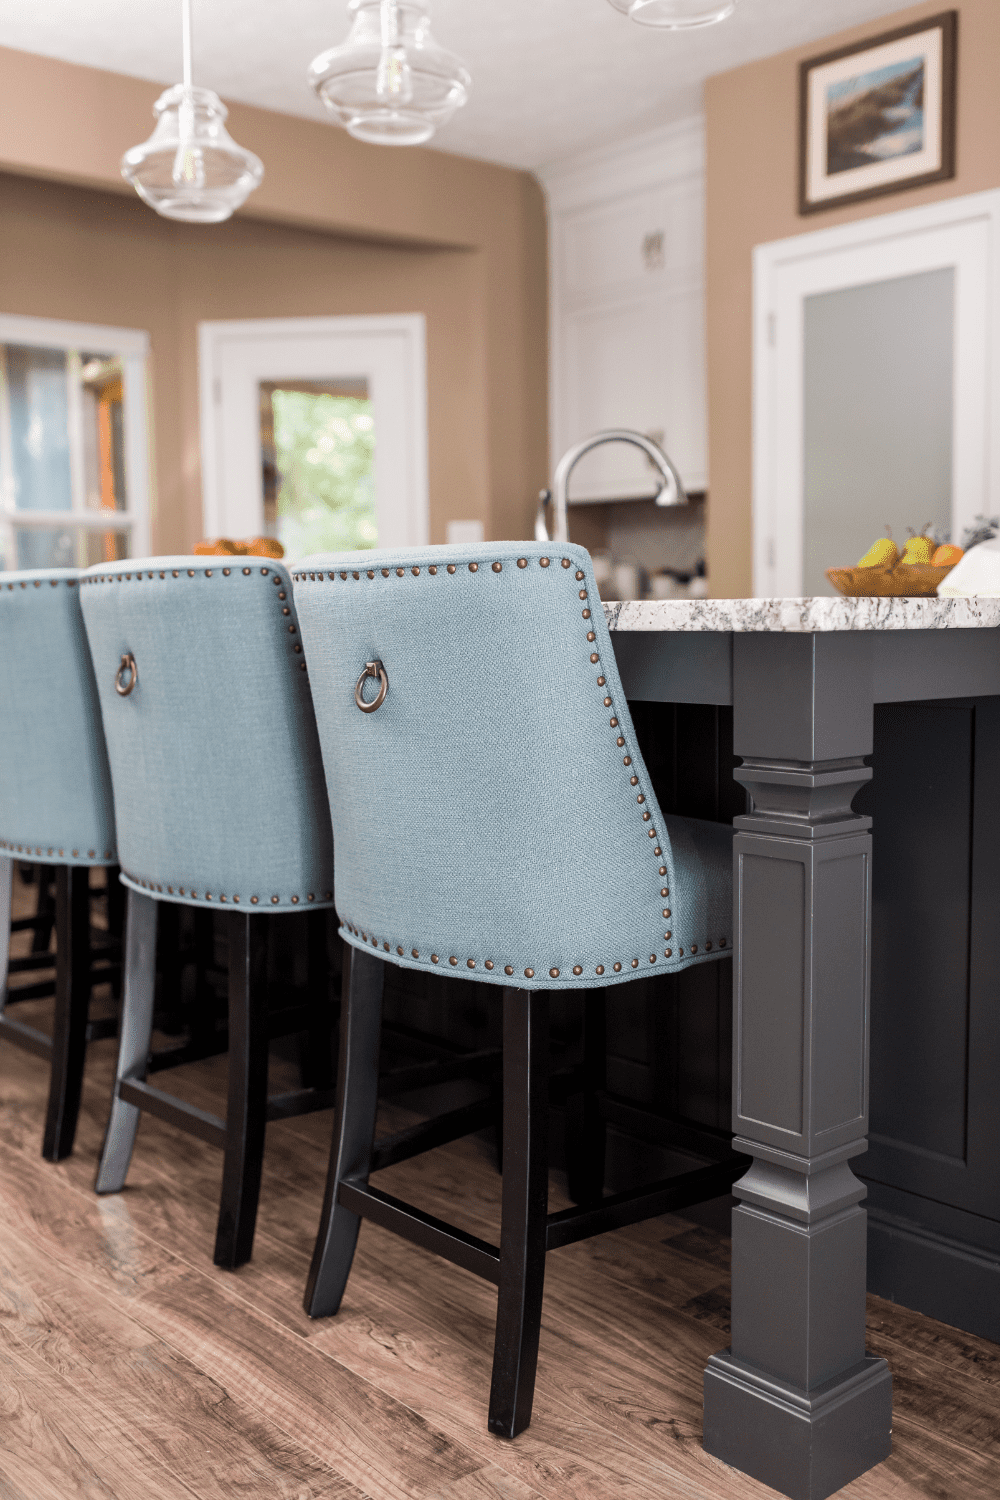 Nicholas Design Build | A versatile kitchen with blue upholstered bar stools.